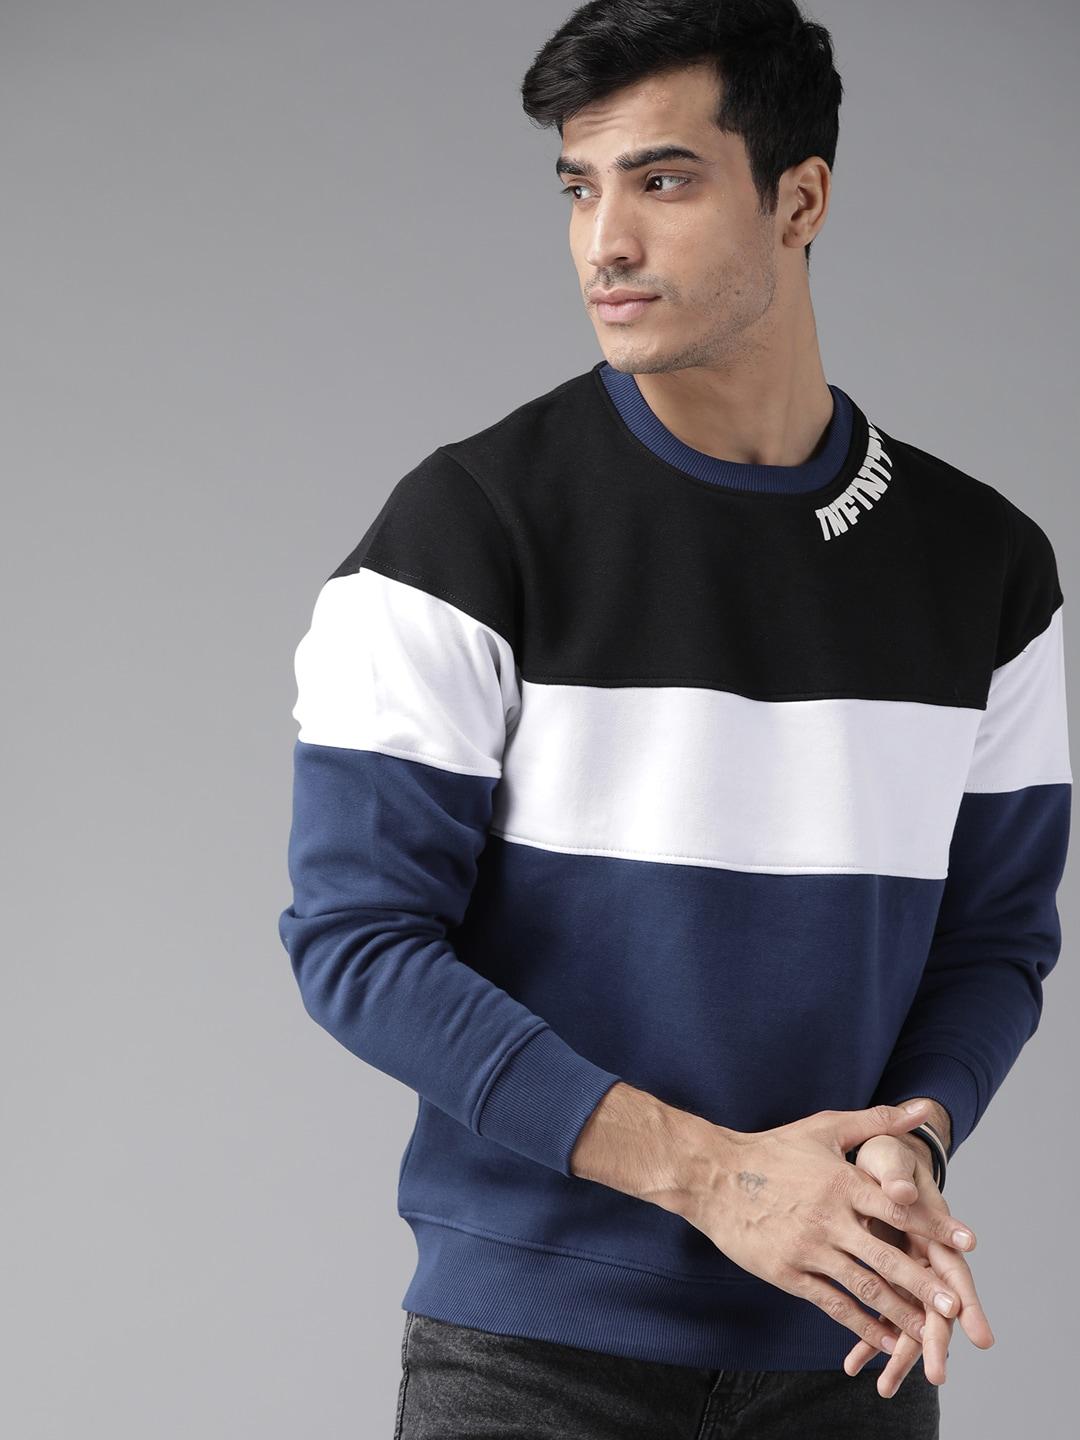 the-roadster-lifestyle-co-men-blue-&-white-colourblocked-sweatshirt